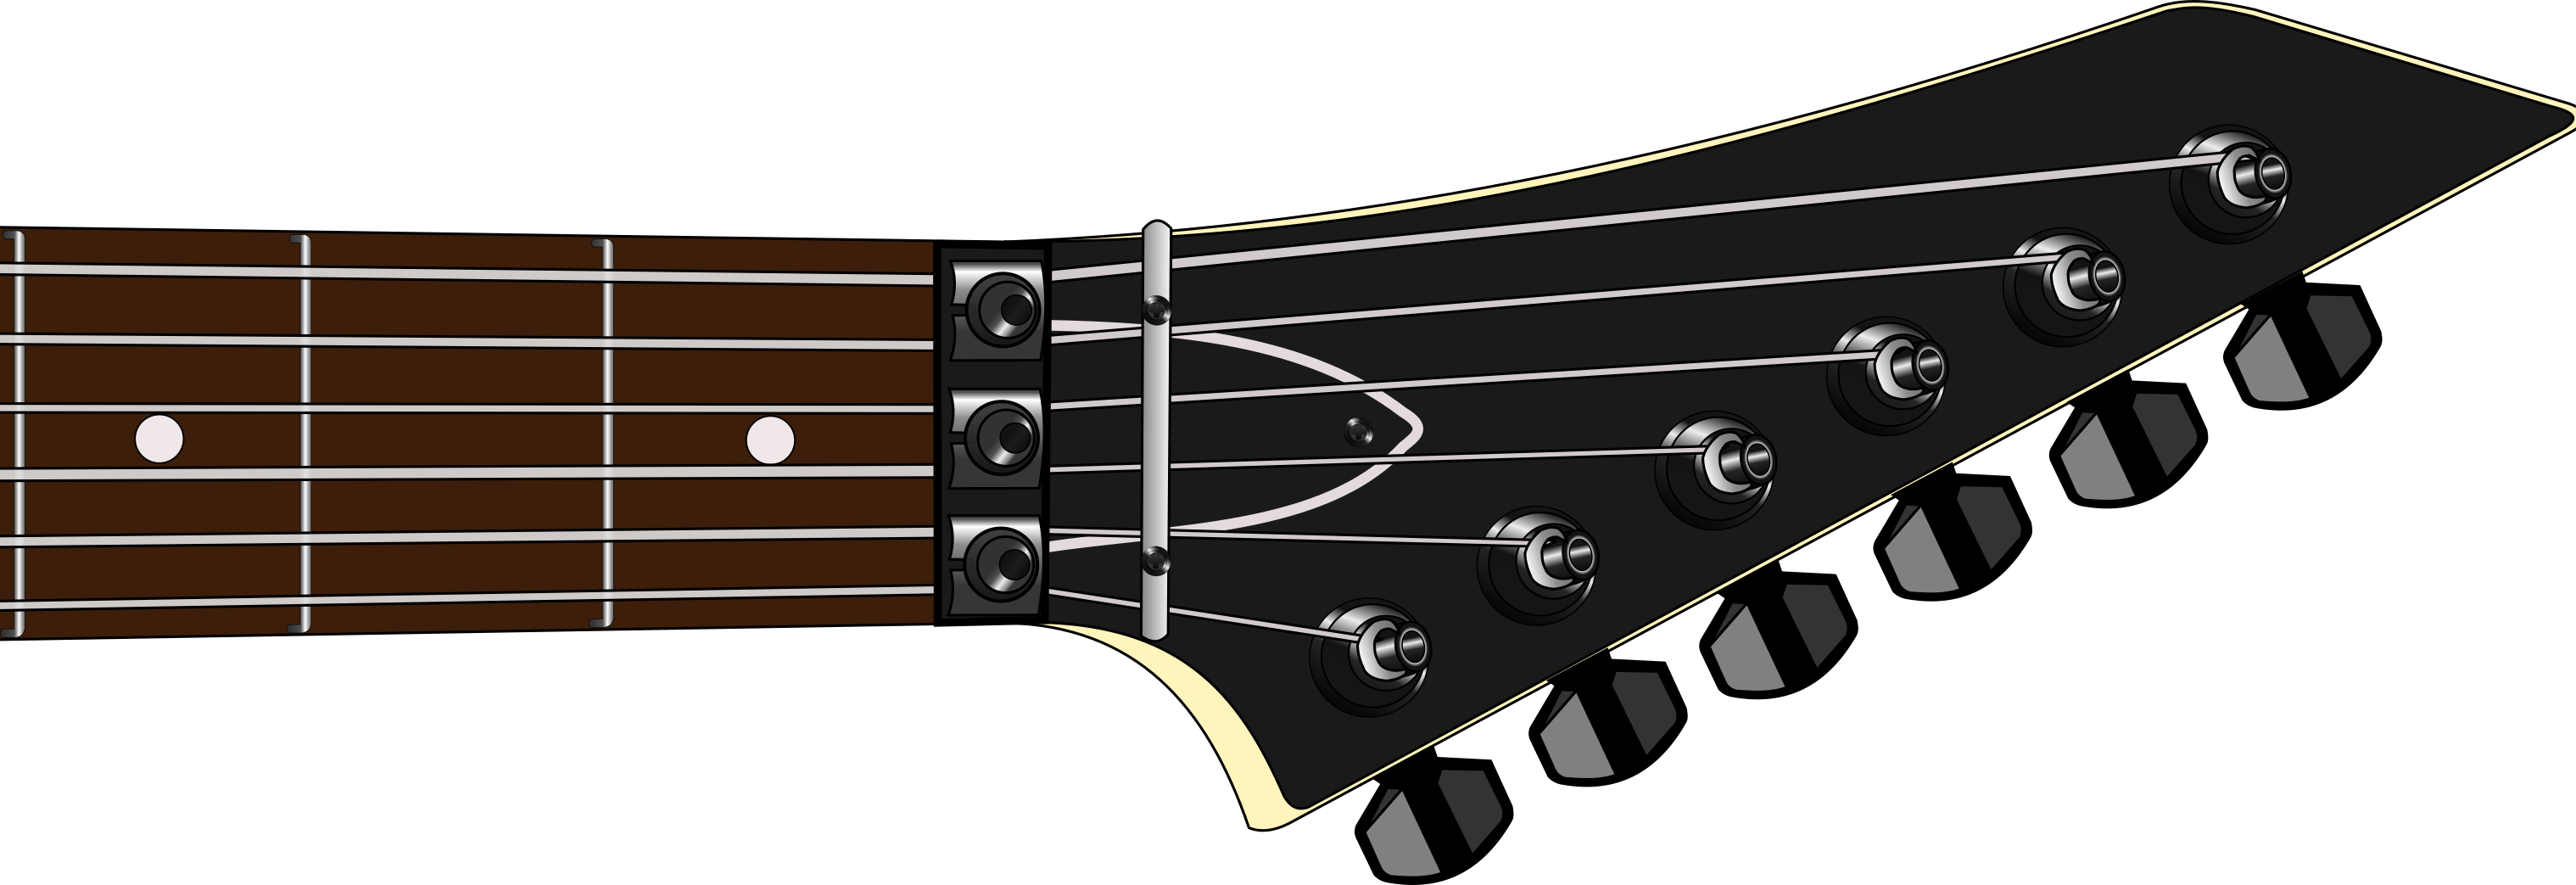 guitar neck image